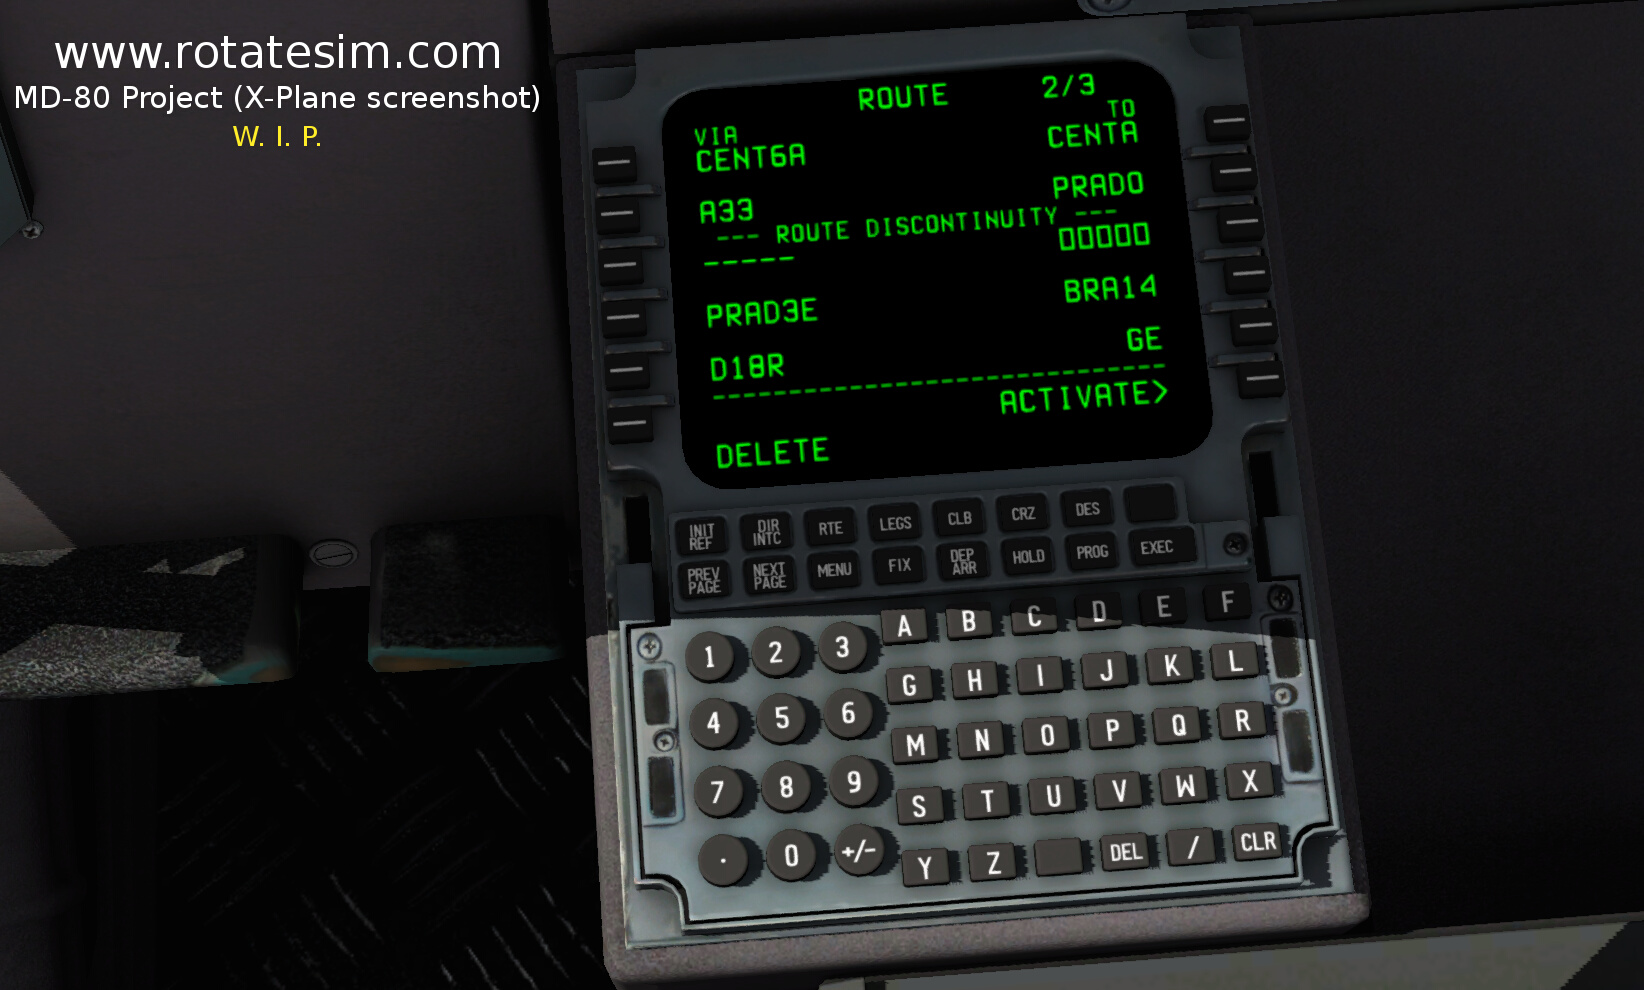 MD-80 screenshot FMC 07 ROUTE 2